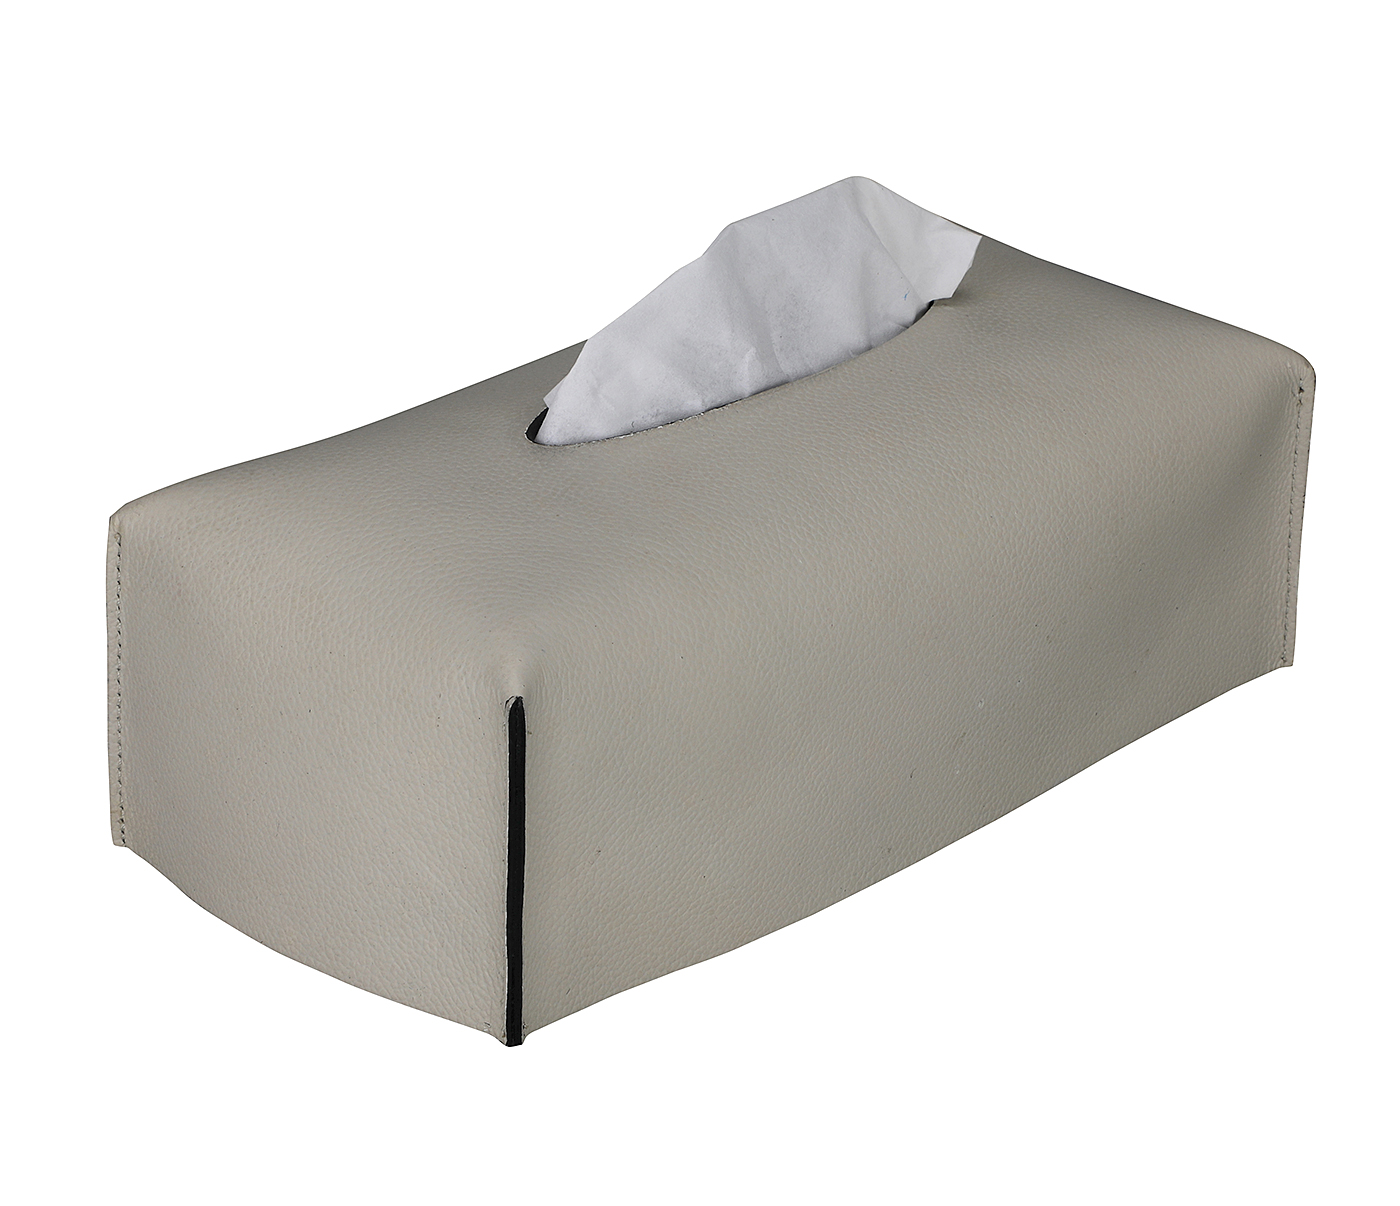 Tissue box-Adamis-Offwhite Colour Pure Leather Tissue Box - Offwhite